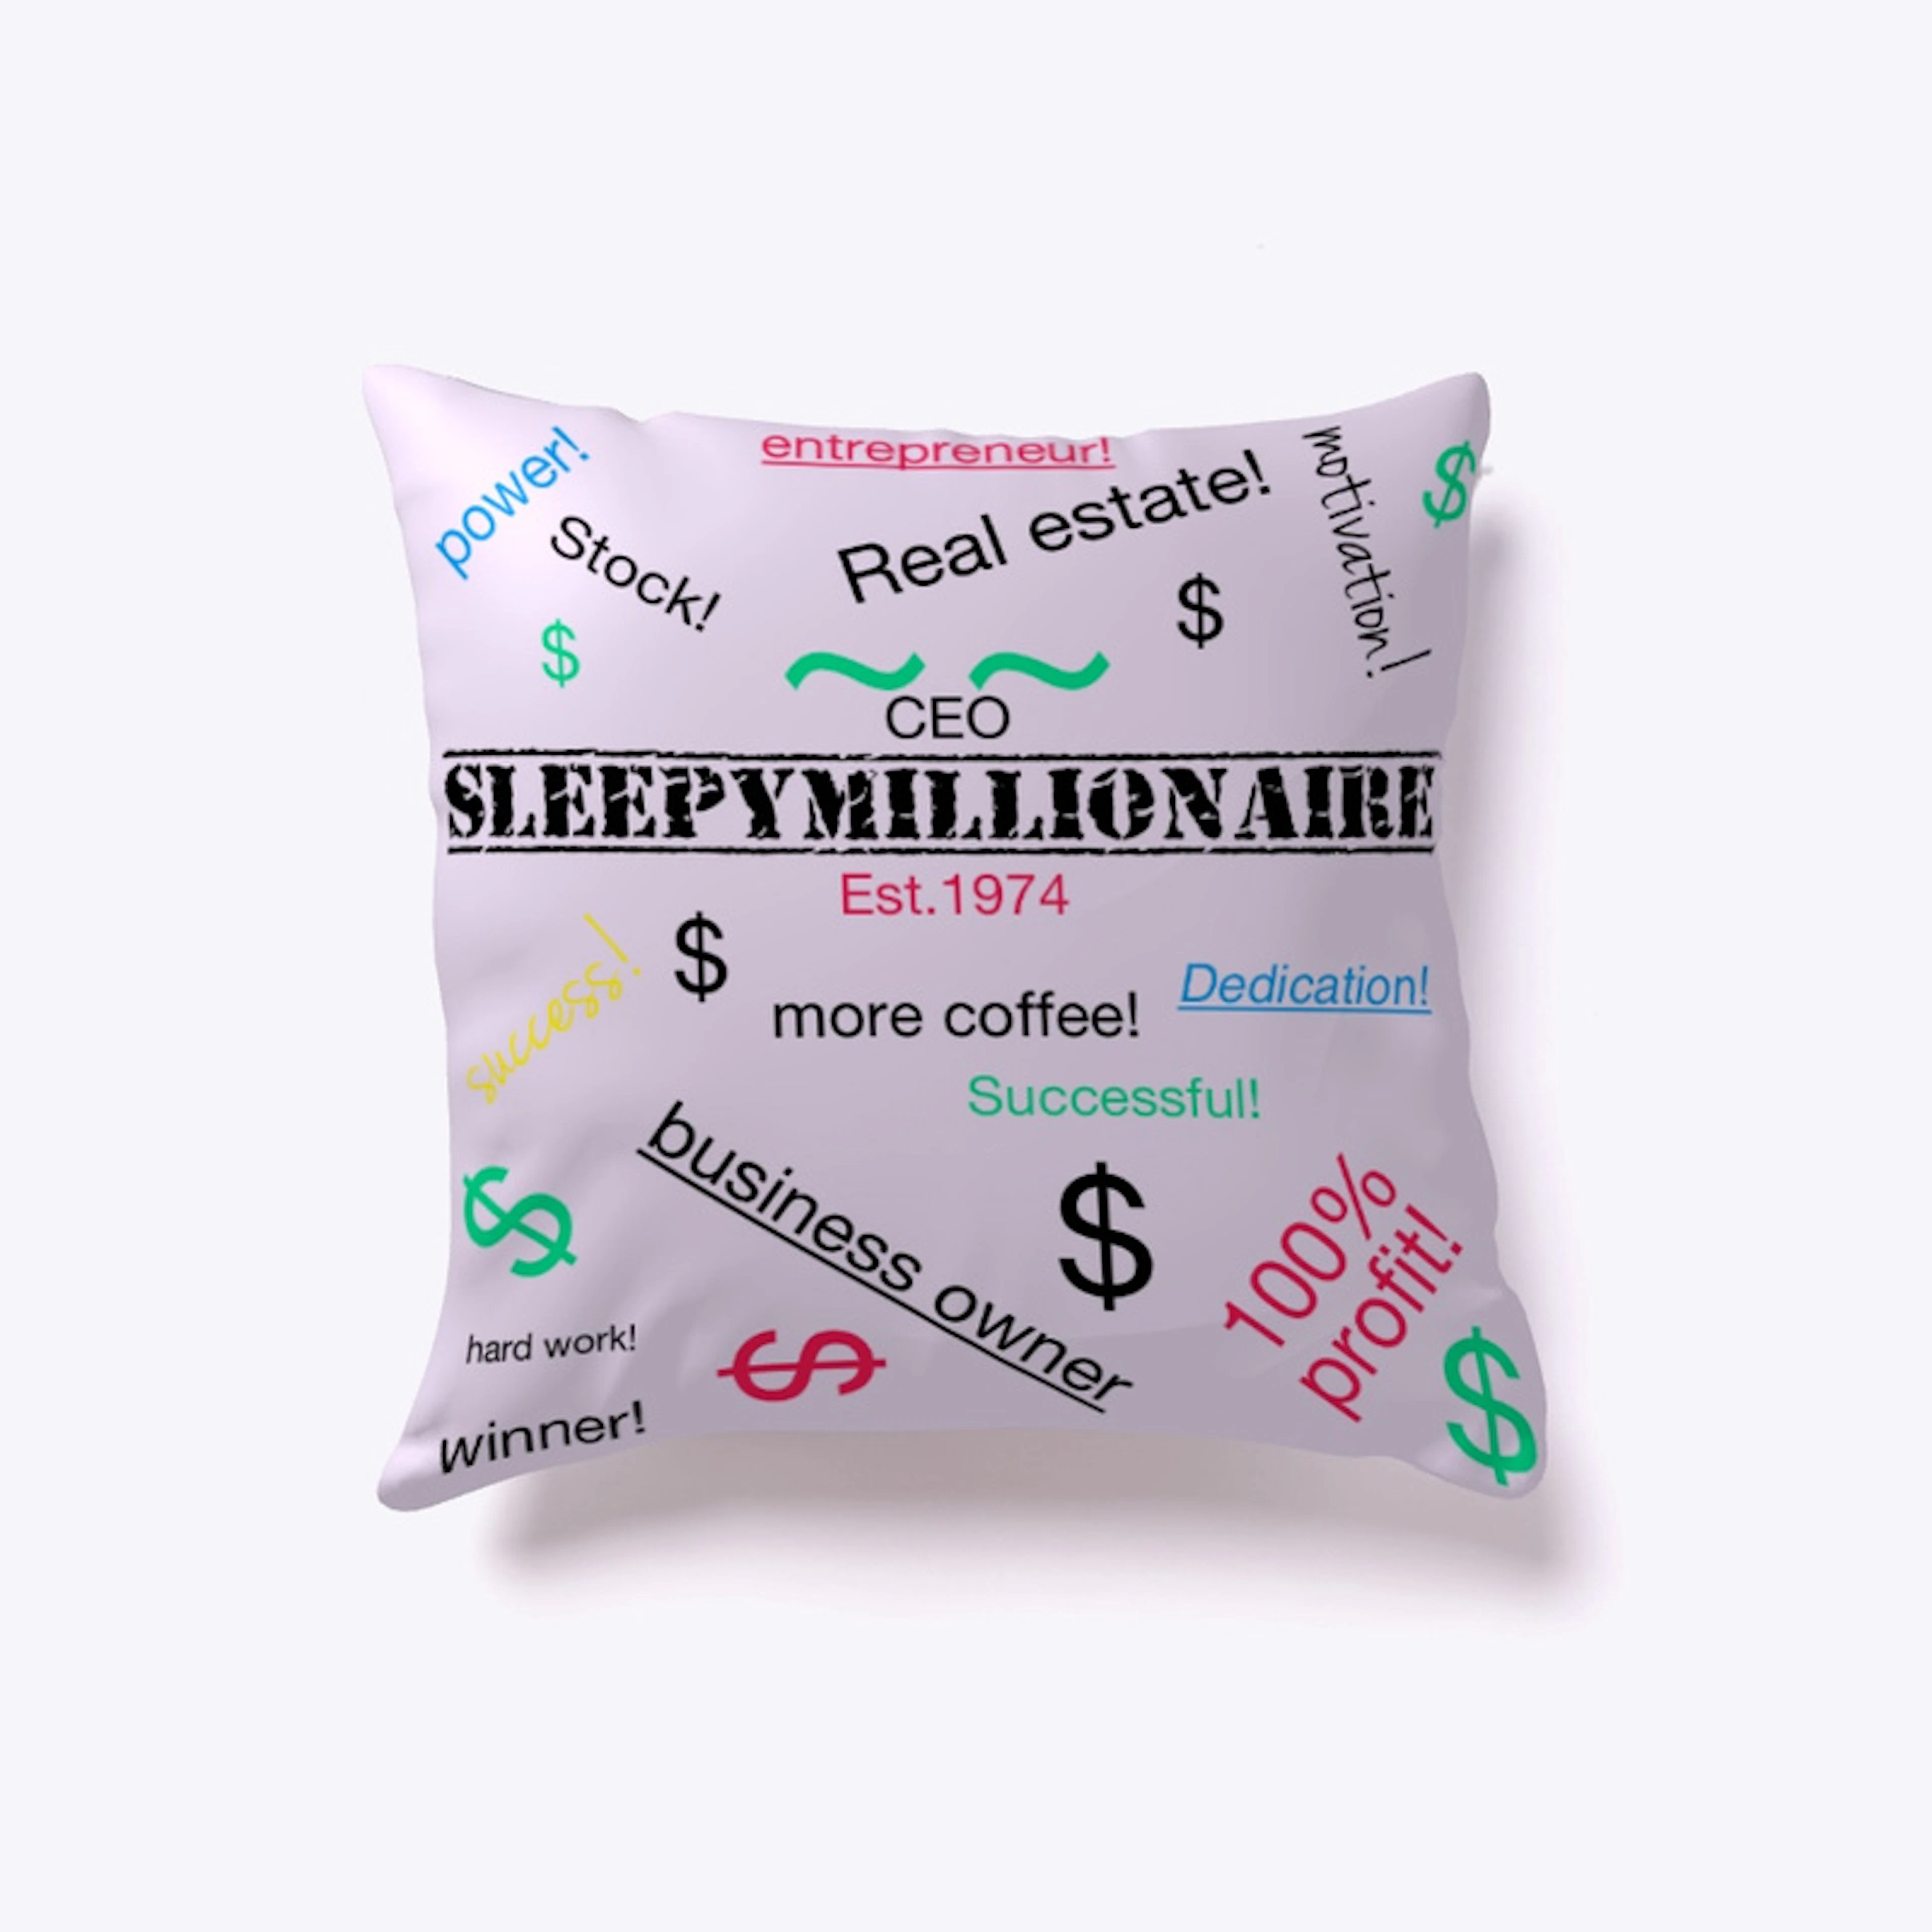 Sleepy Millionaire dream pillow